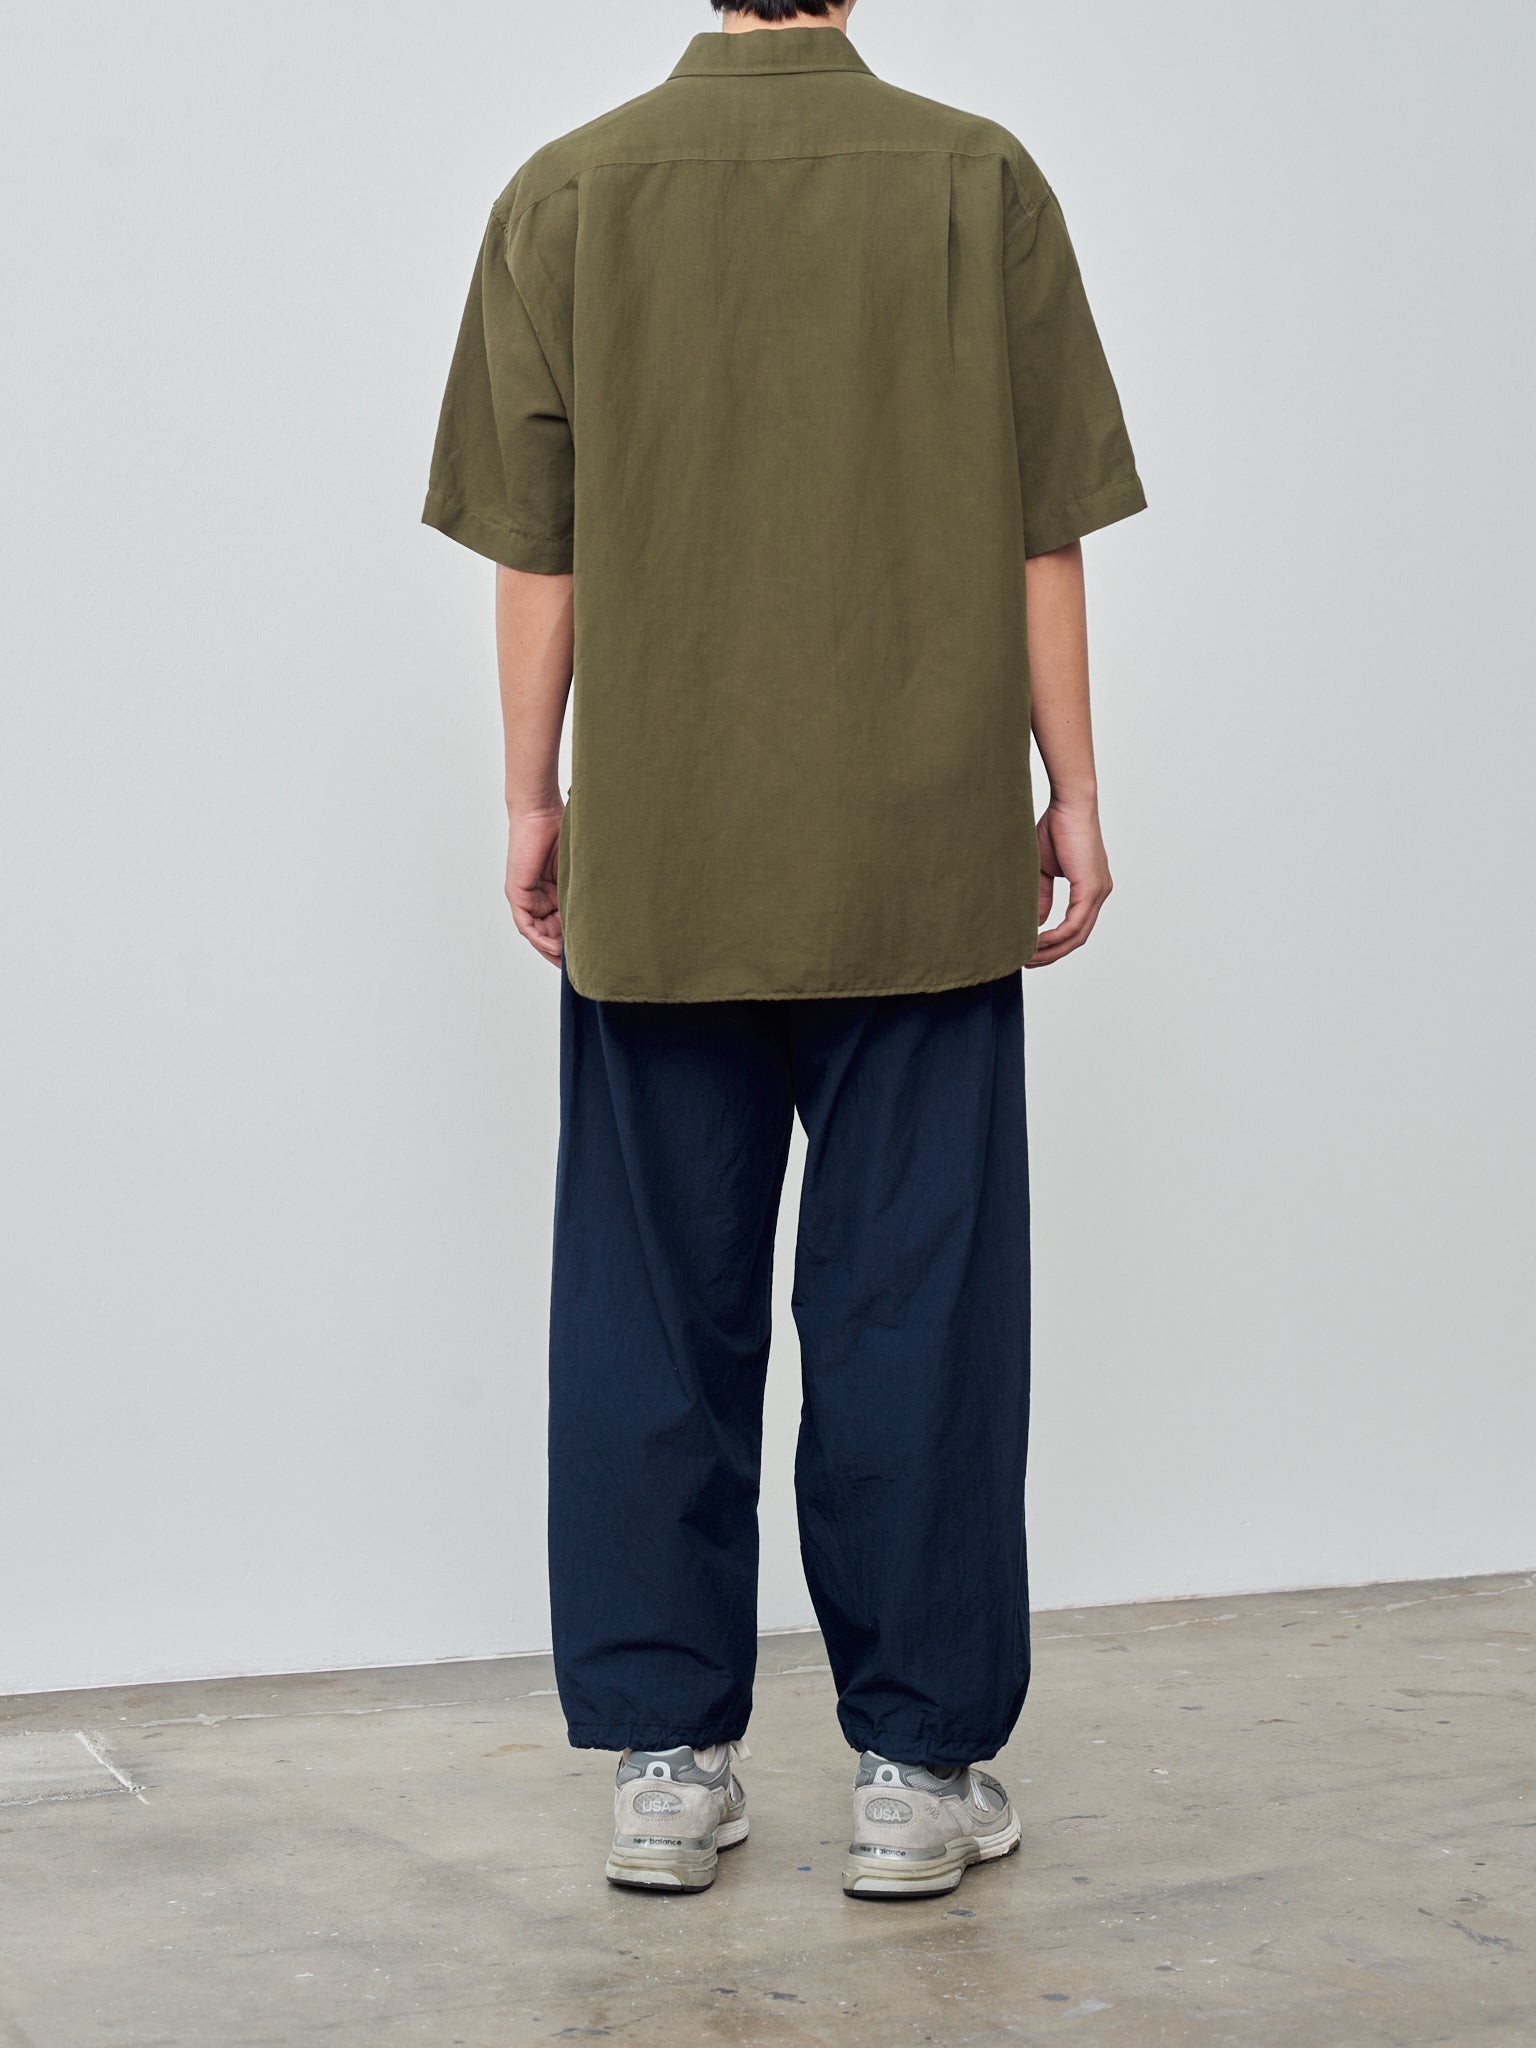 Namu Shop - Yoko Sakamoto Open Collar Shirt - Olive